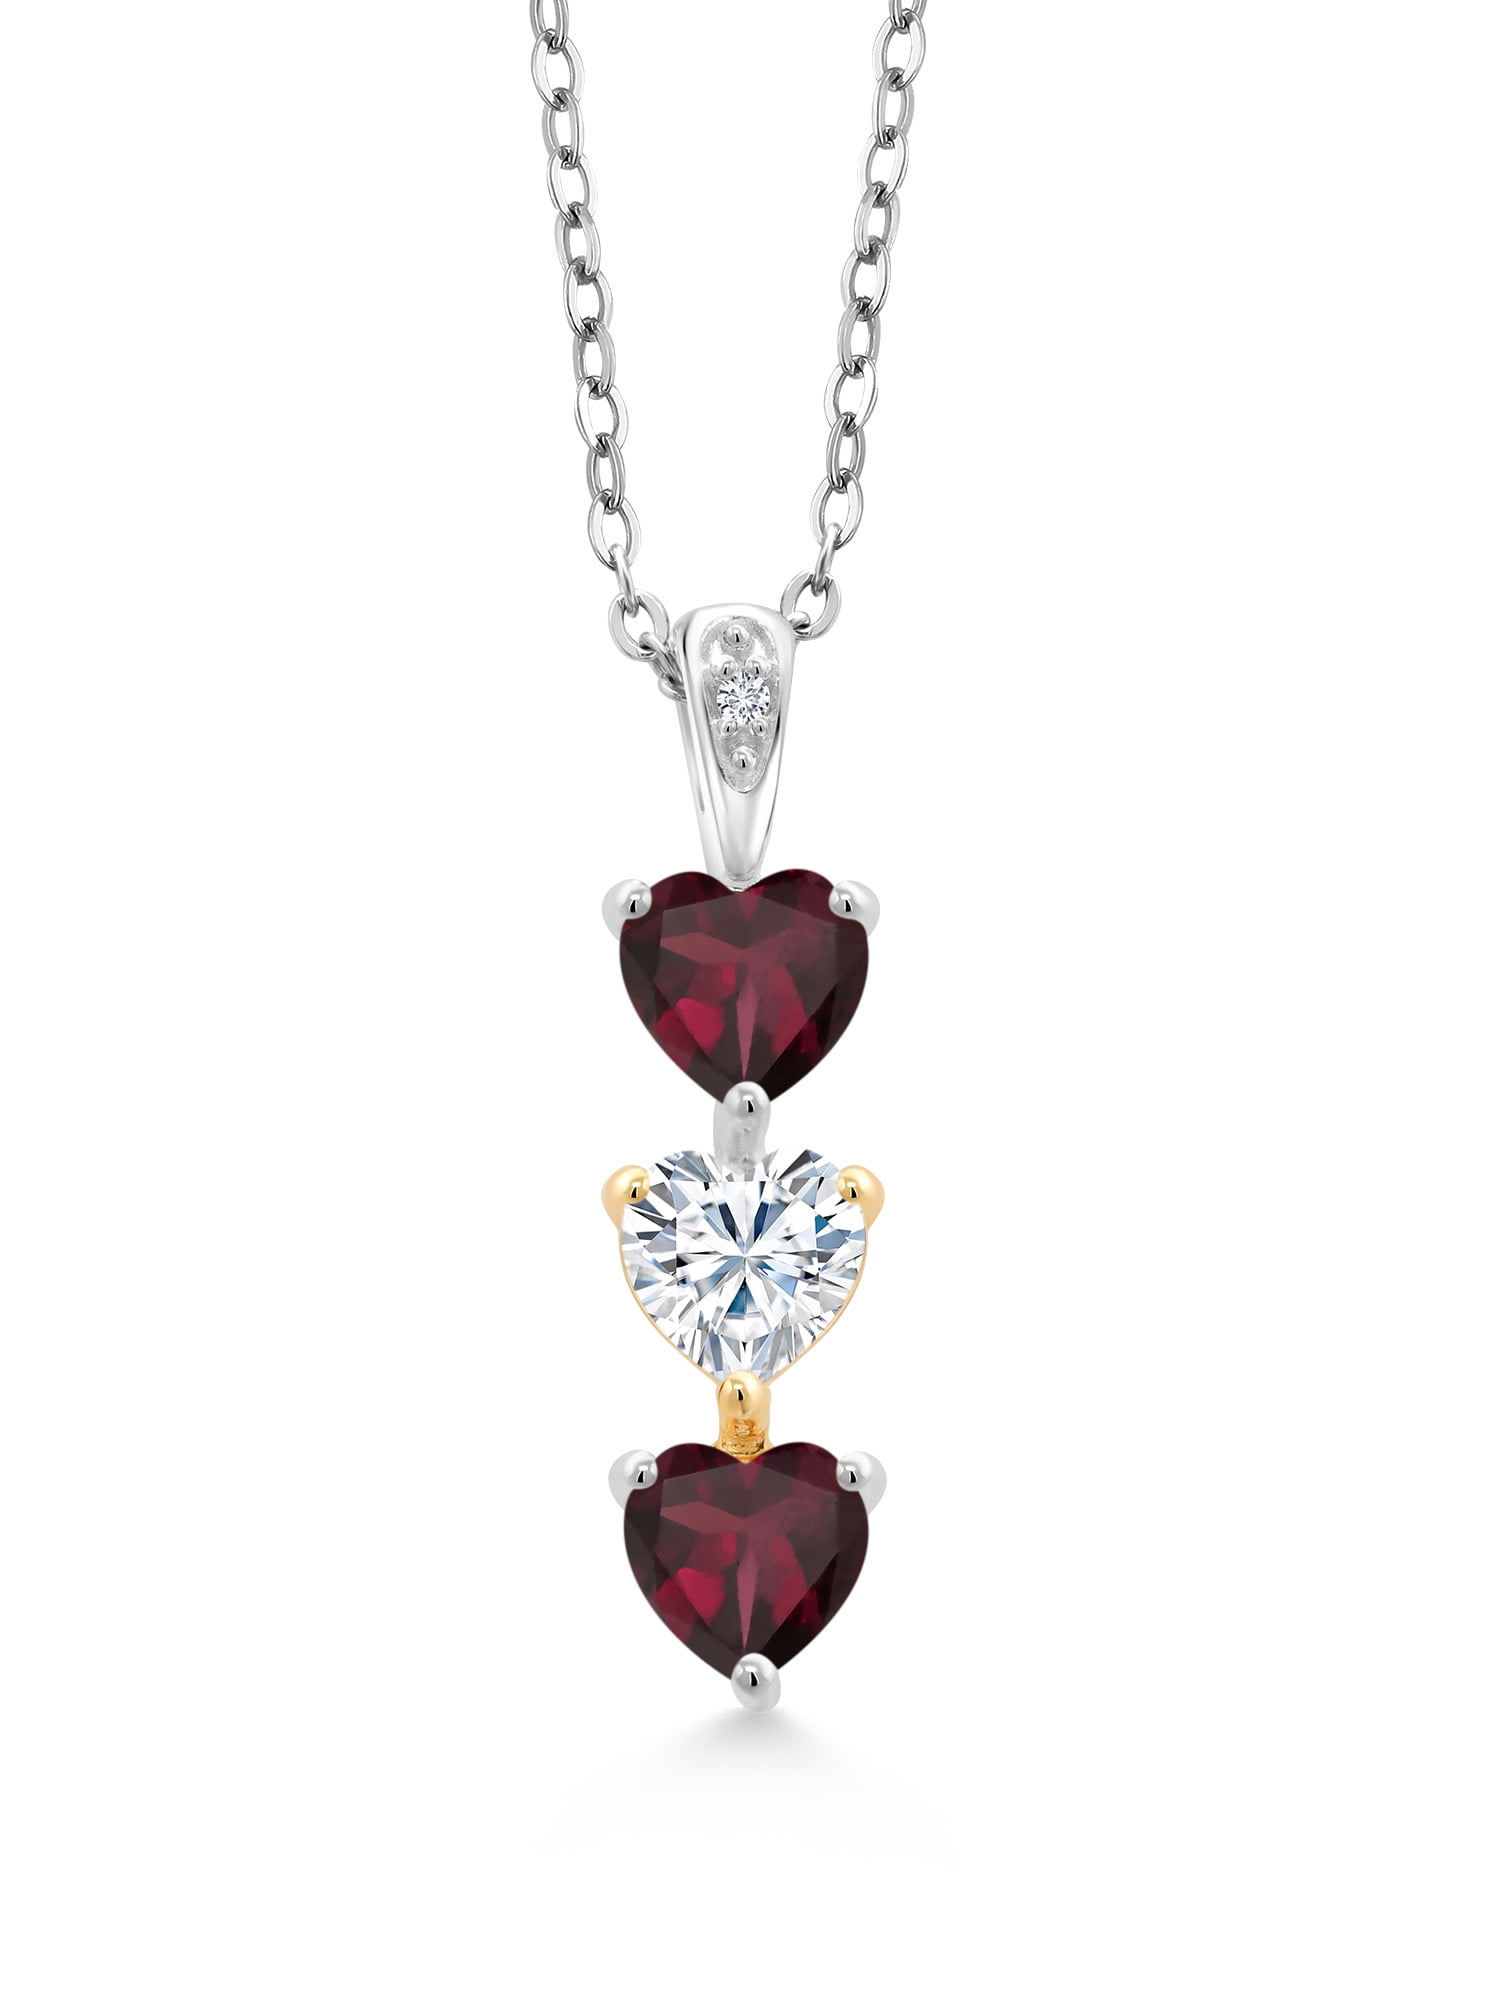 Gem Stone King Keren Hanan Lab Grown Diamond 3 Stone Heart Shape Pendant  Necklace with Chain 925 Silver and 10K Yellow Gold Rhodolite Garnet Created  